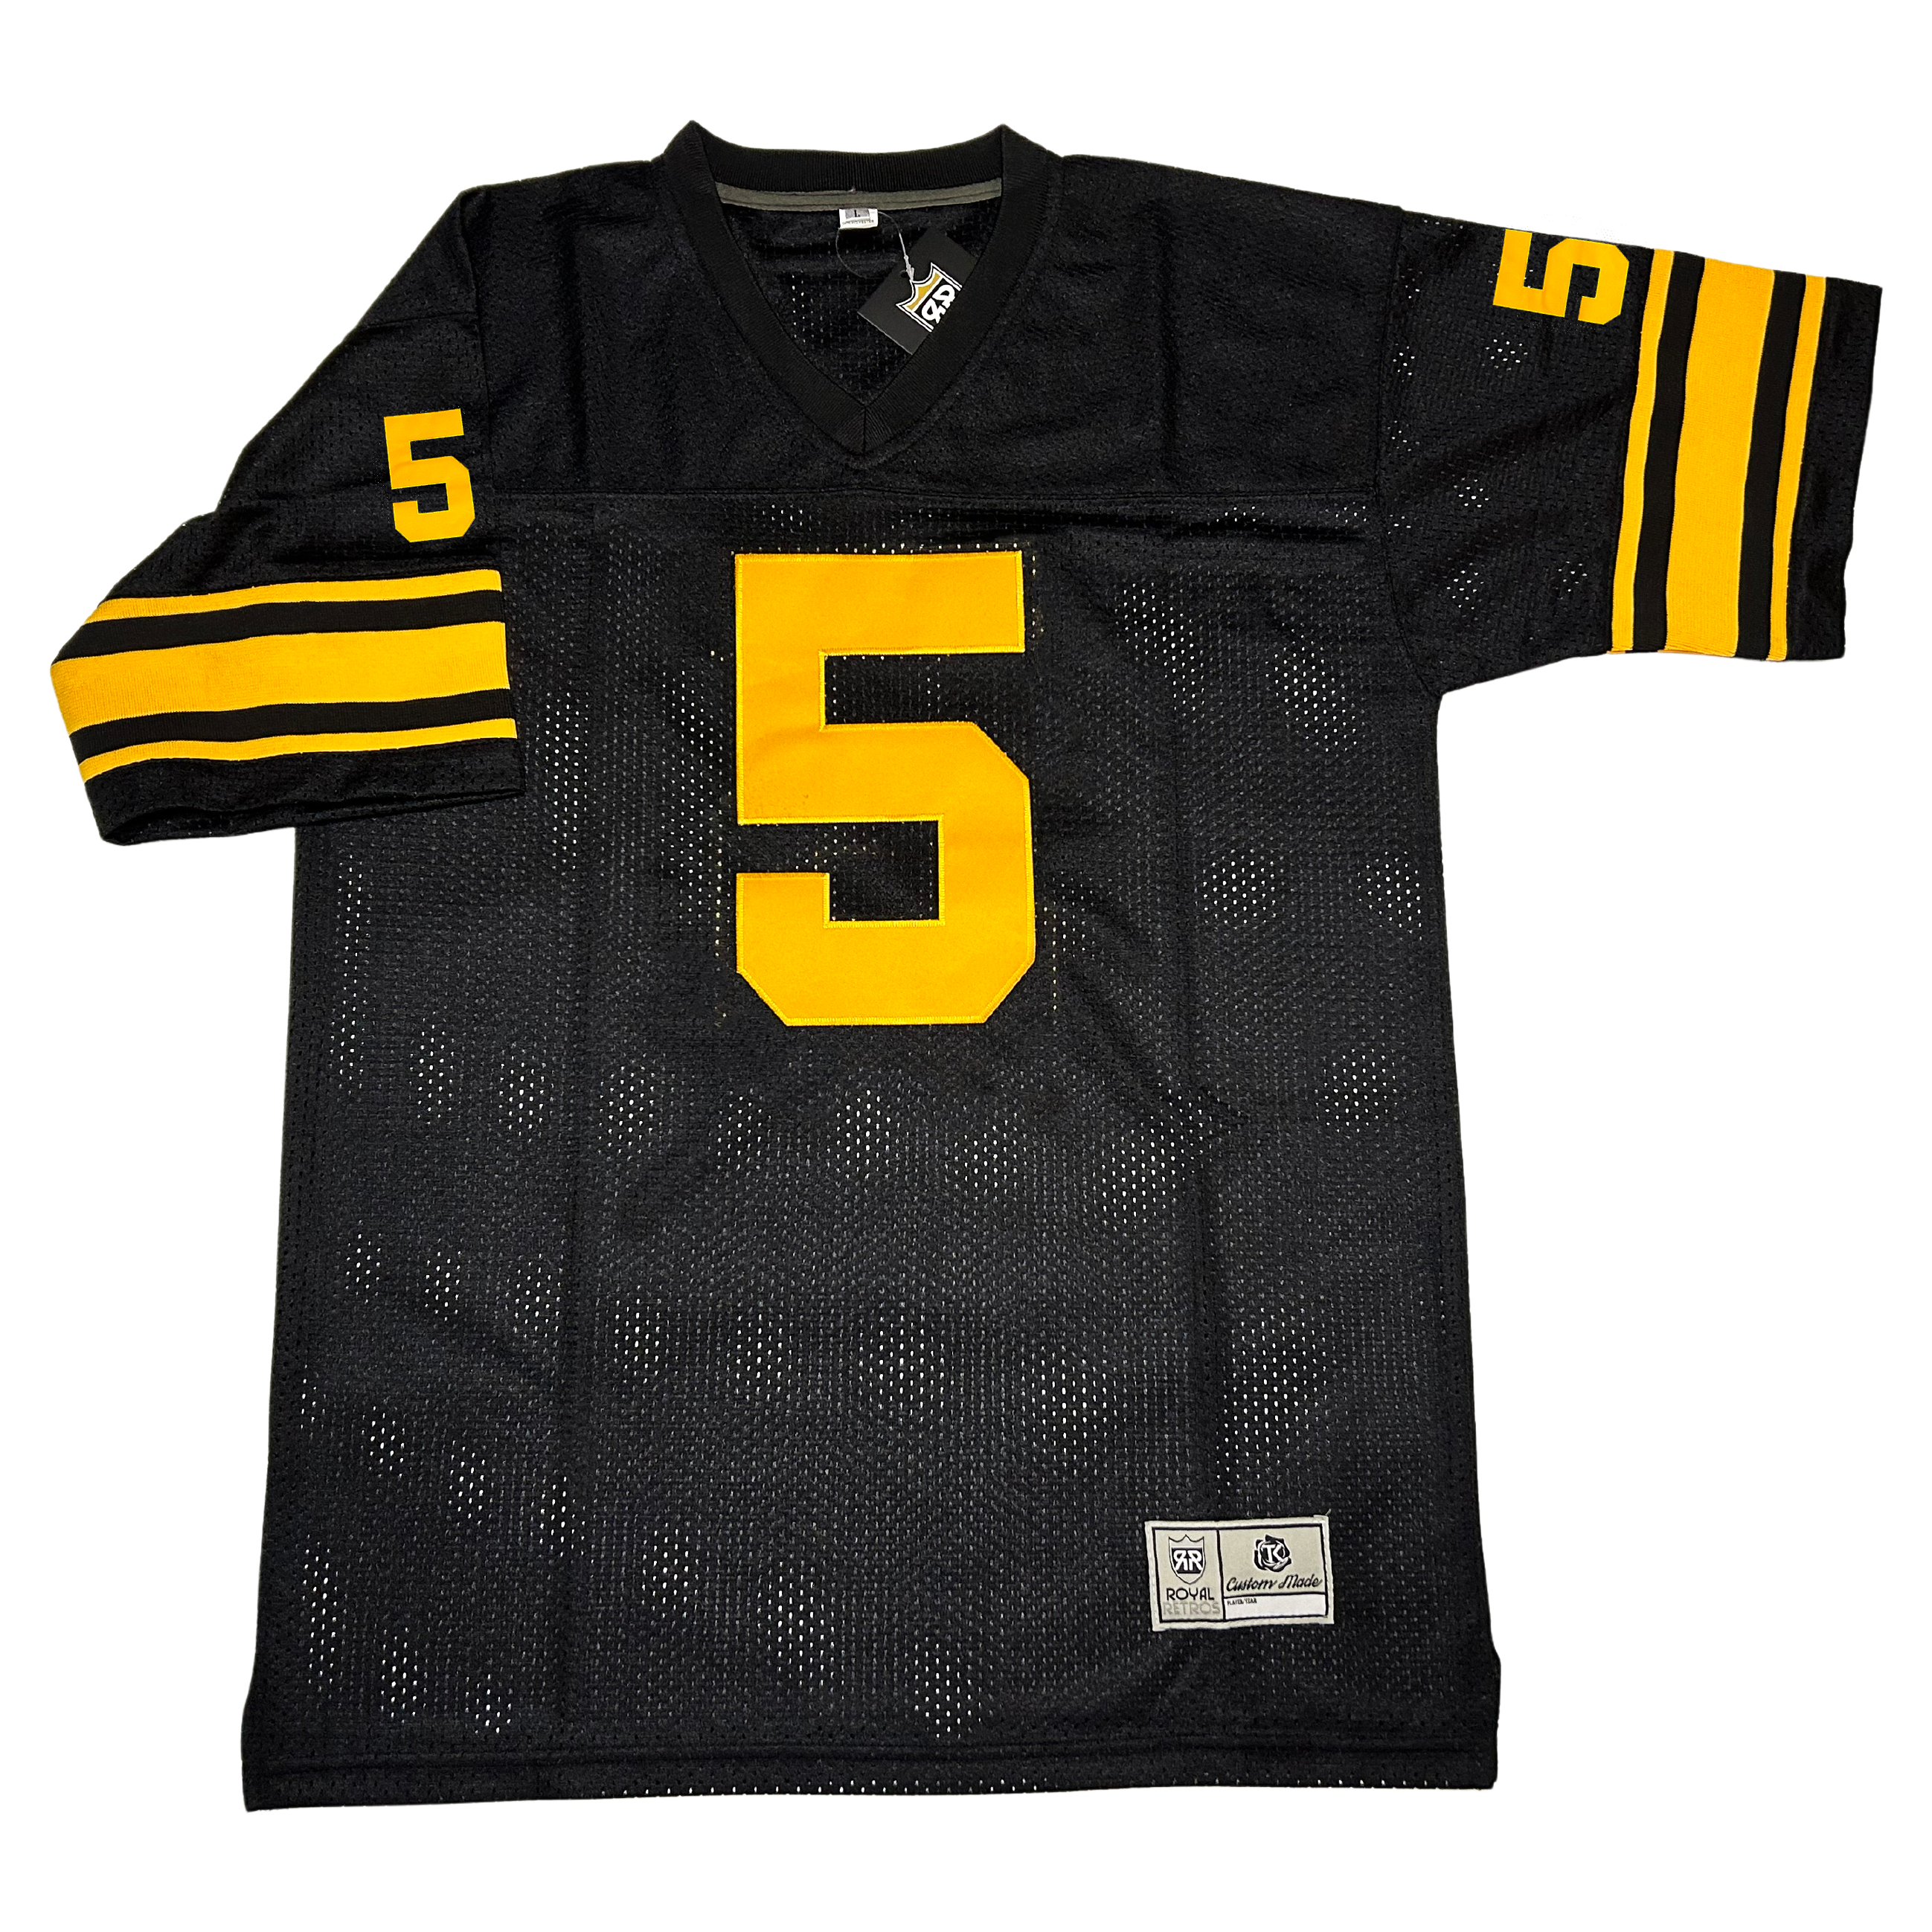 Rhode Island Steelers Jersey - Black - 2XL - Royal Retros